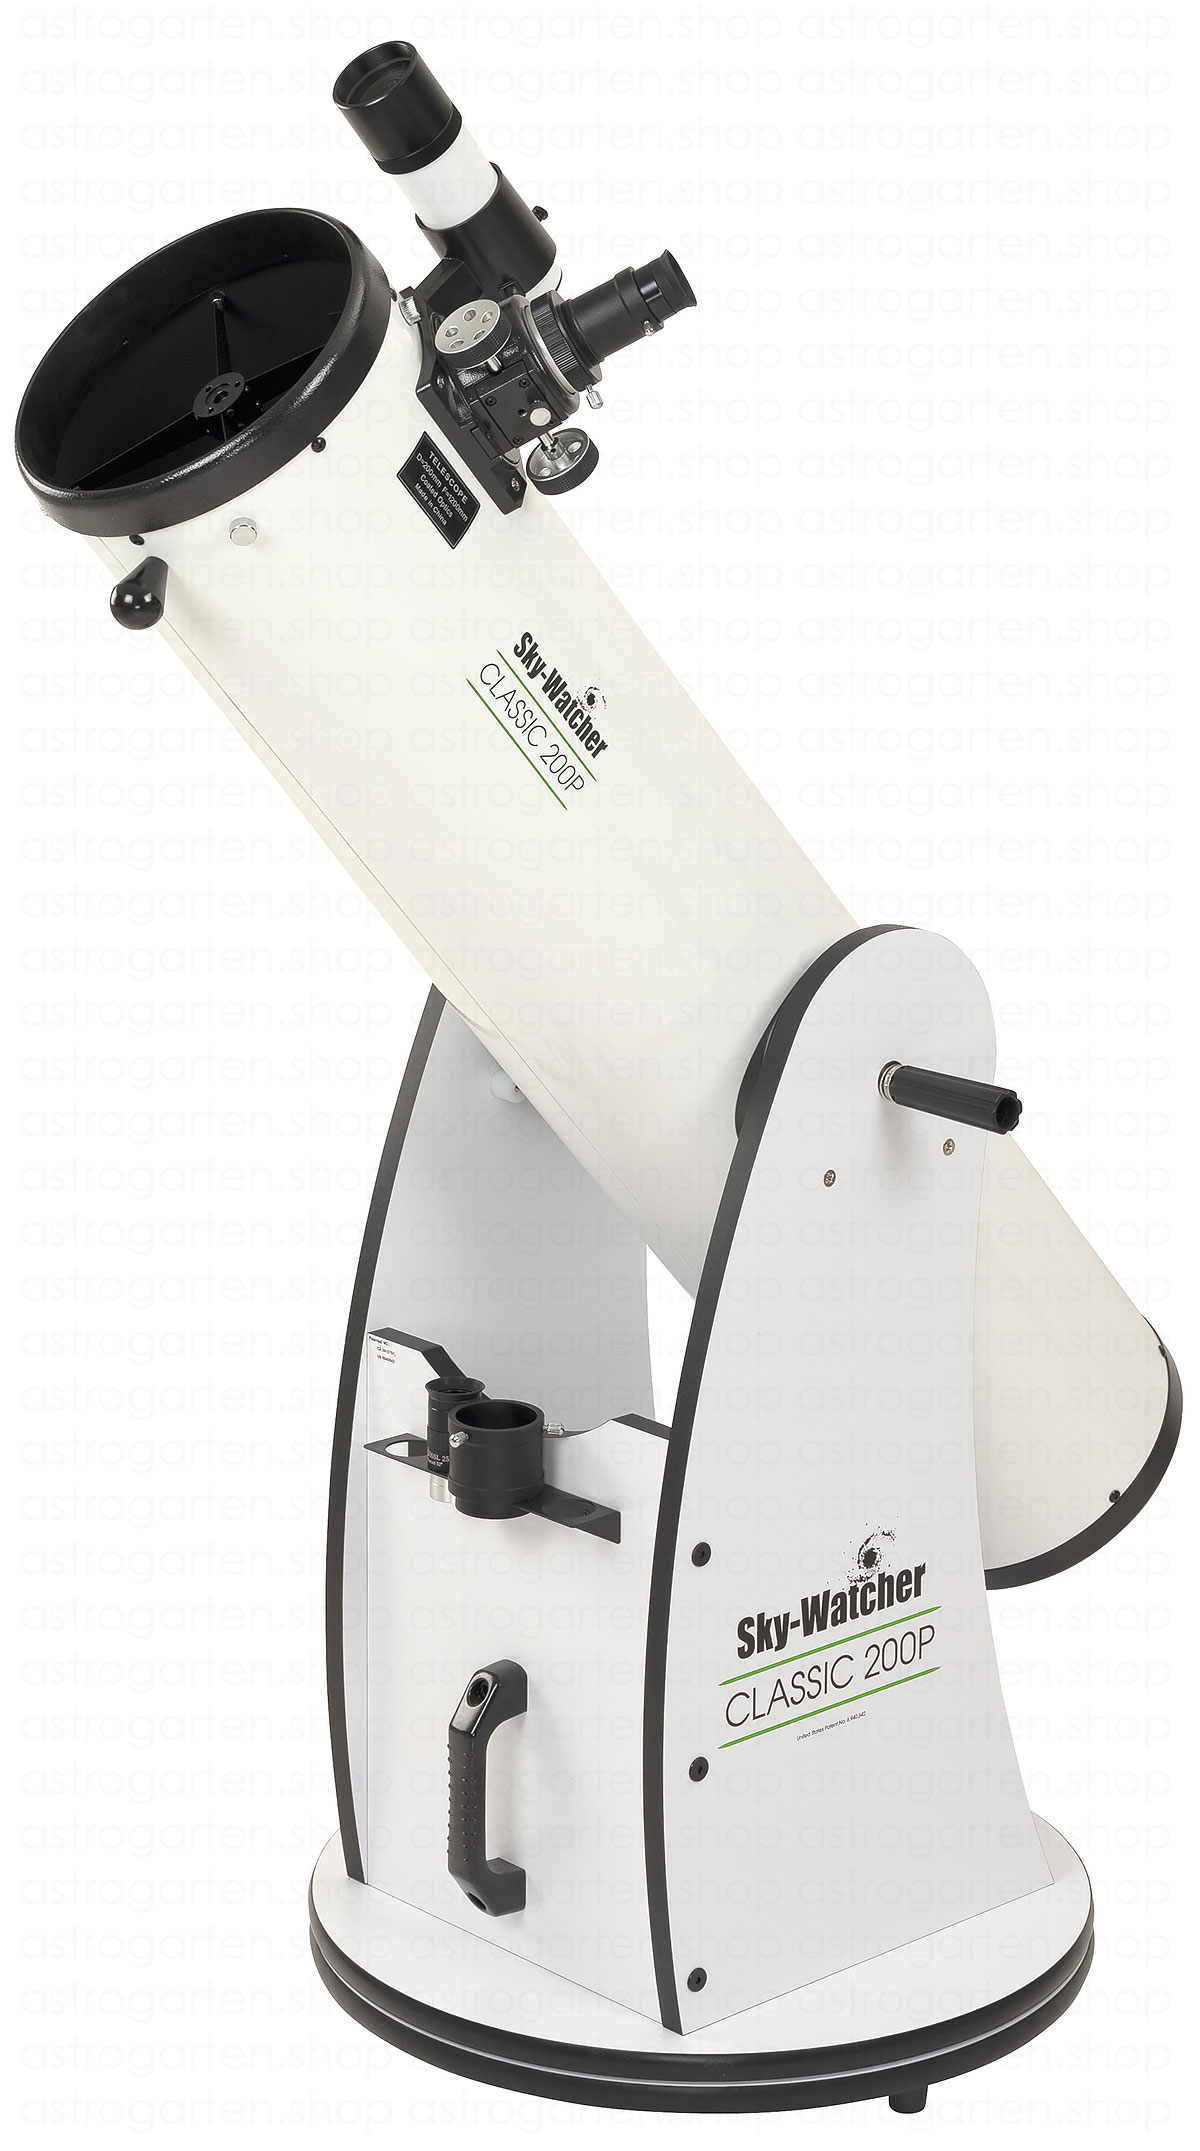 Sky-Watcher SKYLINER-200P (203/1200mm, f/5.91) Dobsonian Sky Watcher Classic 200 Dobsonian 8-inch Aperature Telescope Solid-tube